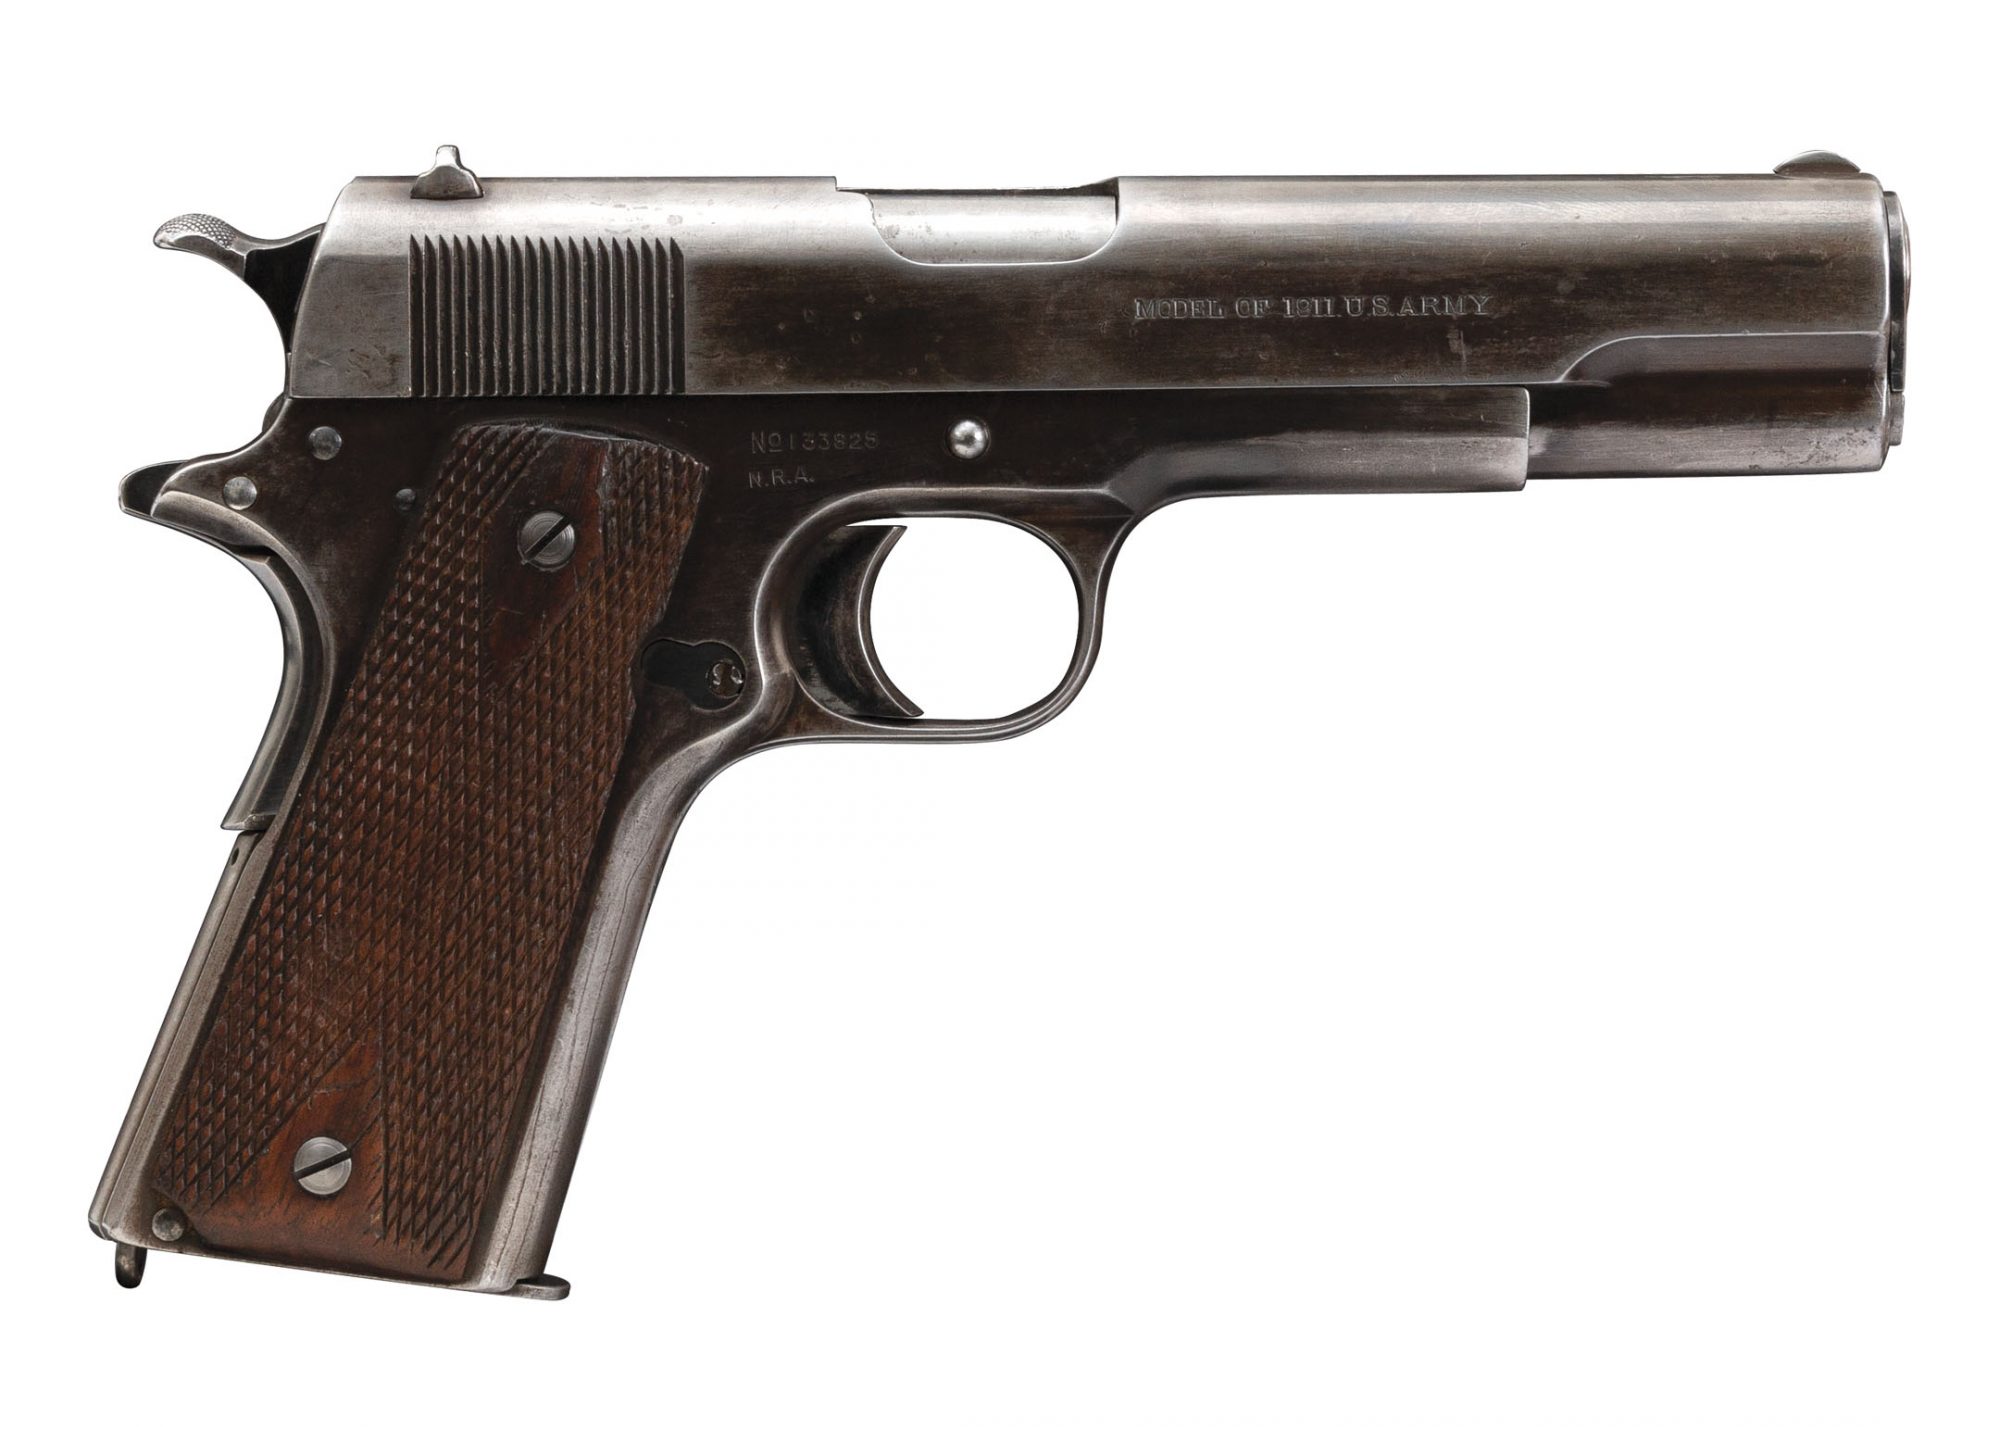 Colt NRA Model 1911 U.S. Army service pistol, before restoration process by Turnbull Restoration Co. of Bloomfield, NY